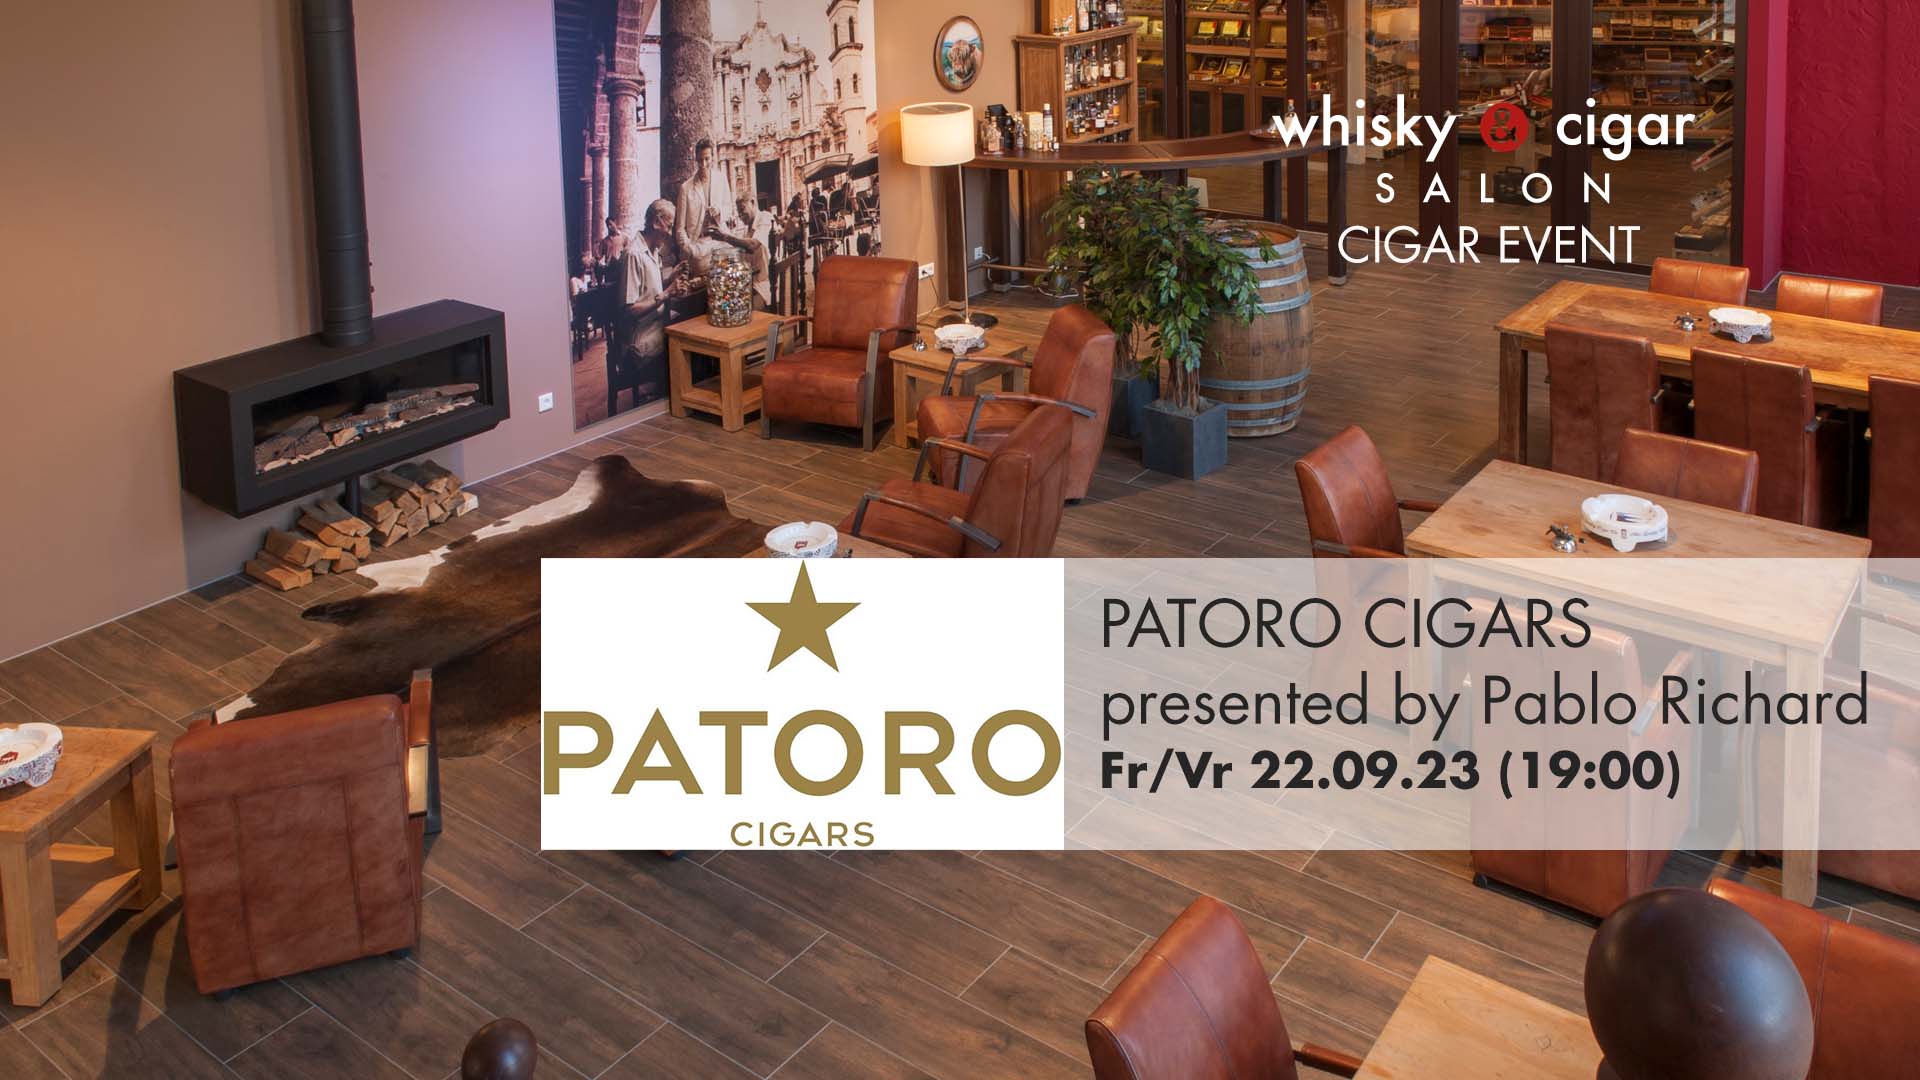 Zigarren-Event mit Patoro Cigars im whisky & cigar salon